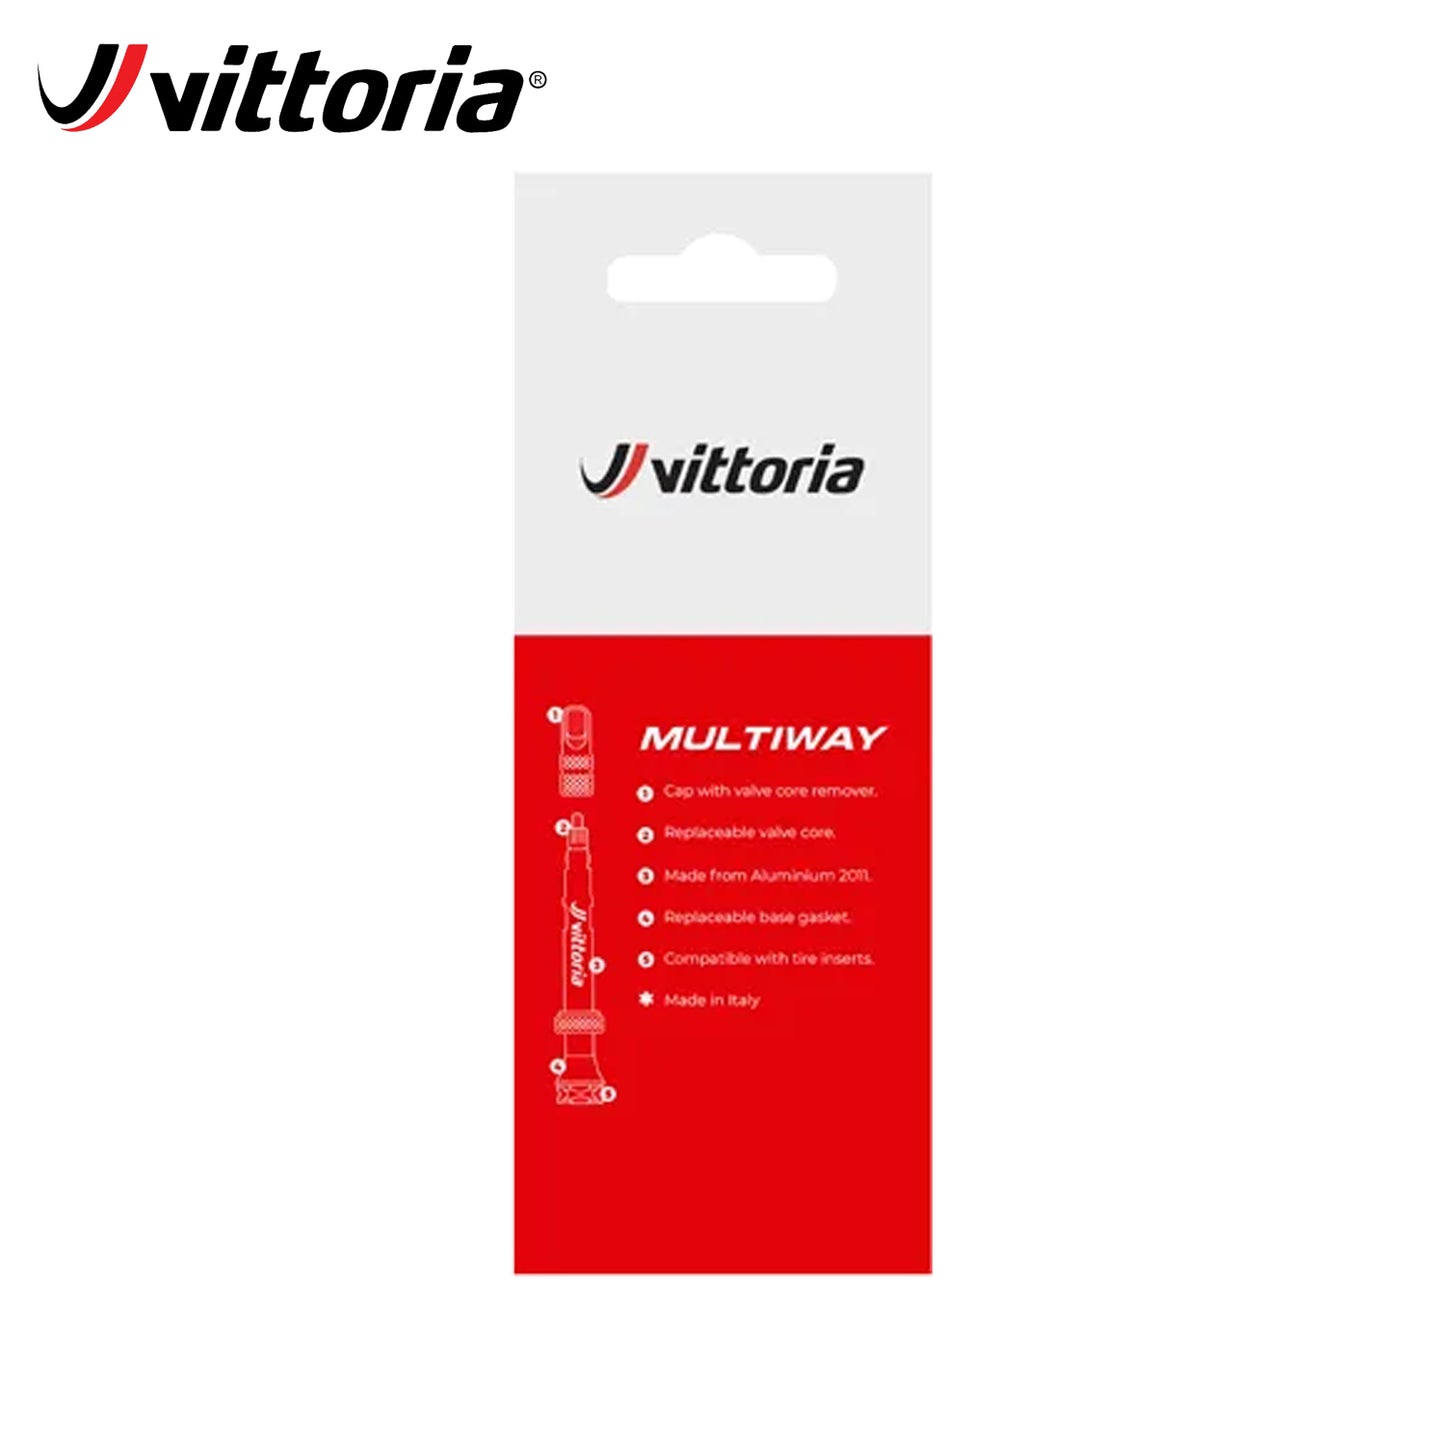 Vittoria Multiway Tubeless Valve Kit